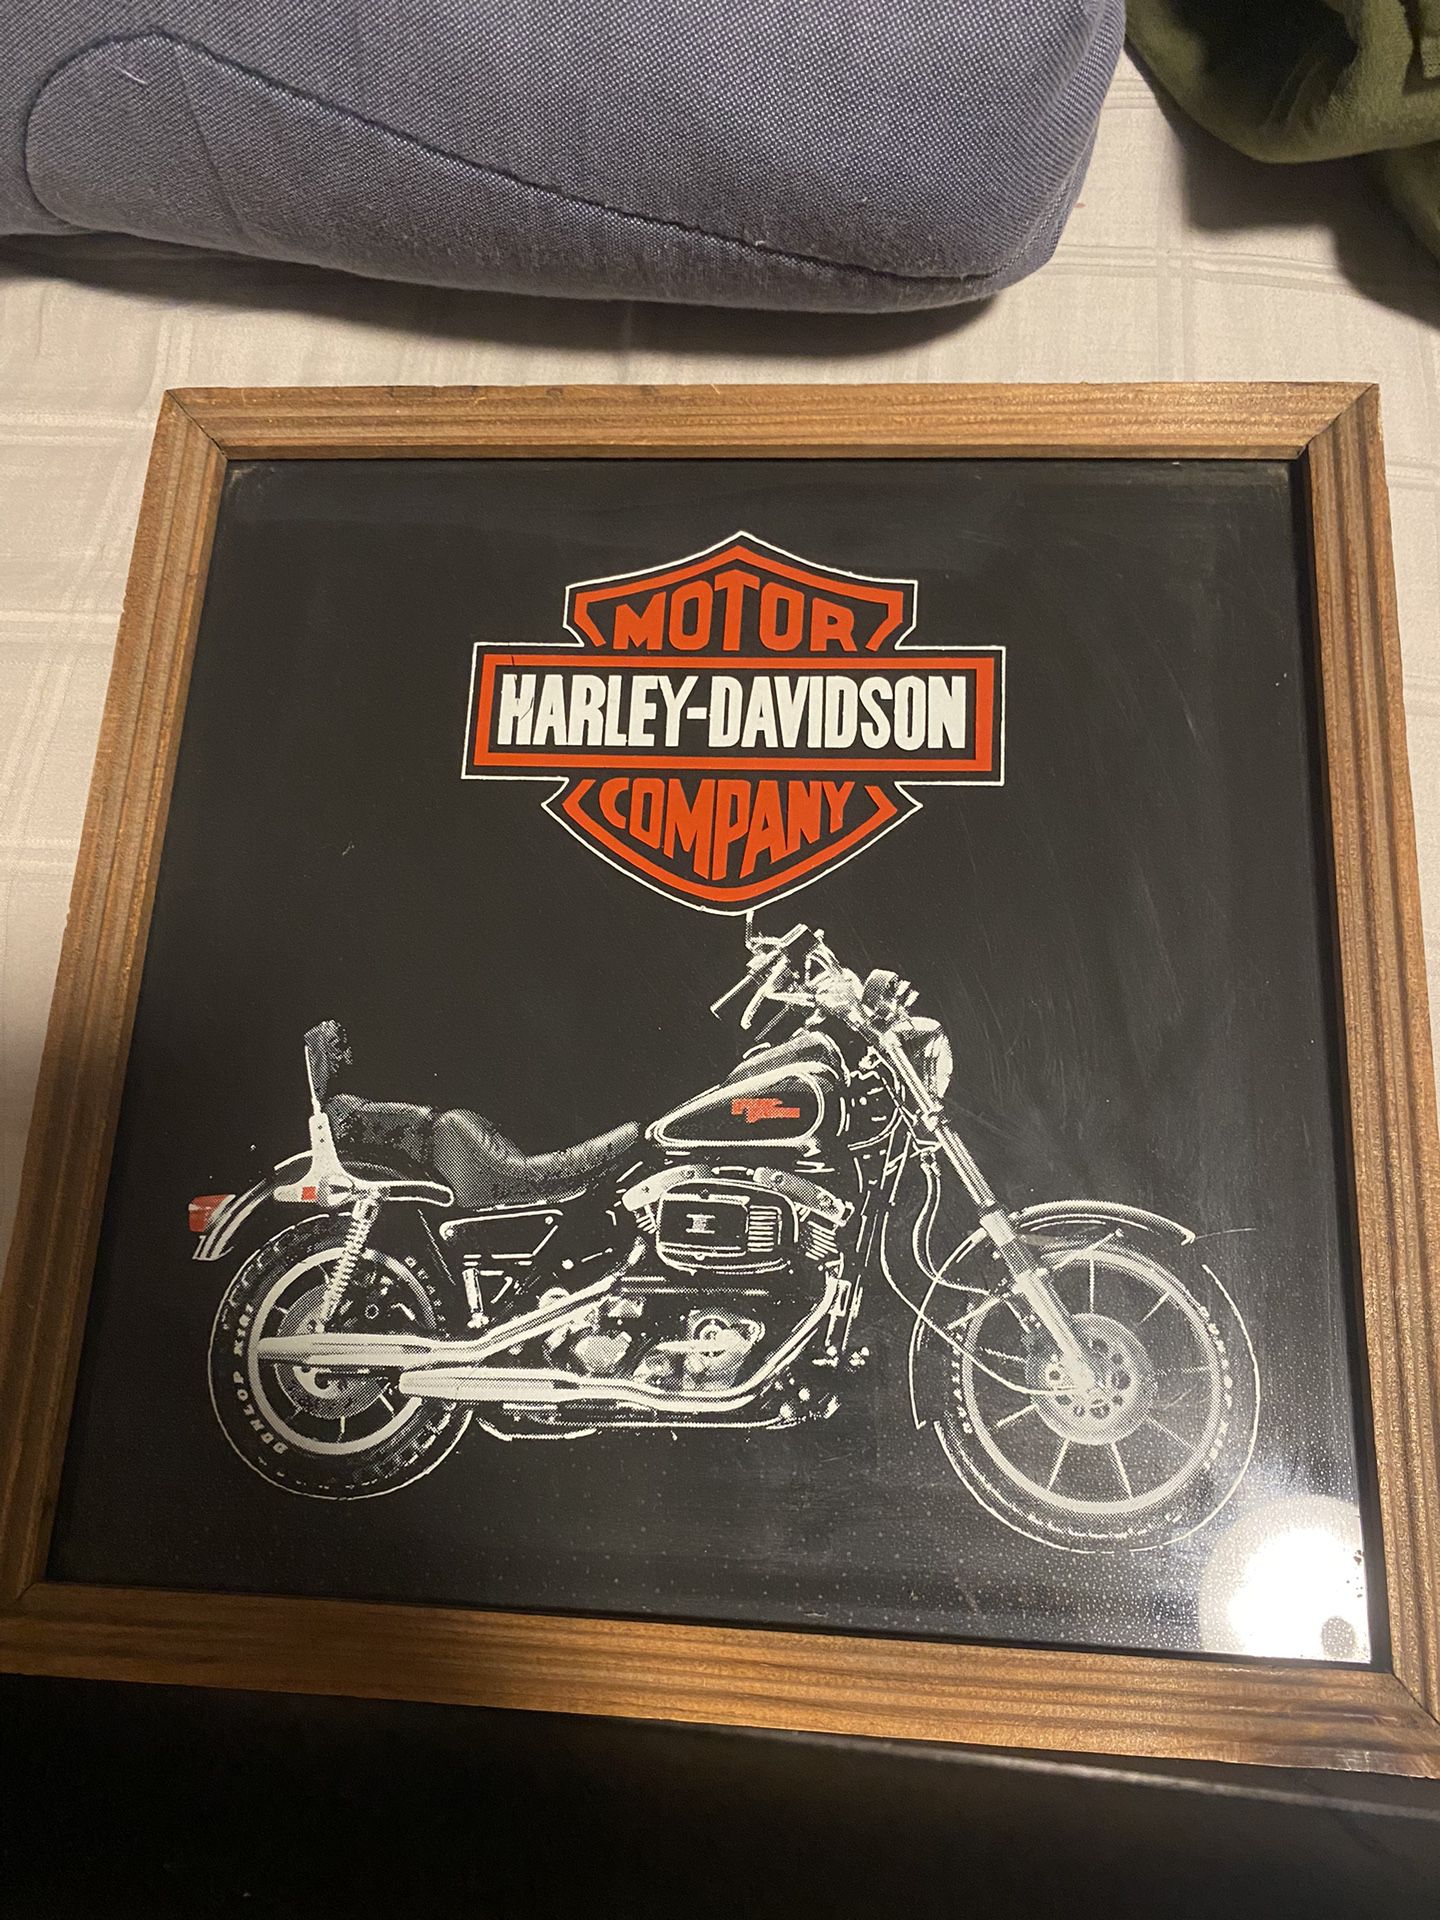 Motor Harley-Davidson Company frame